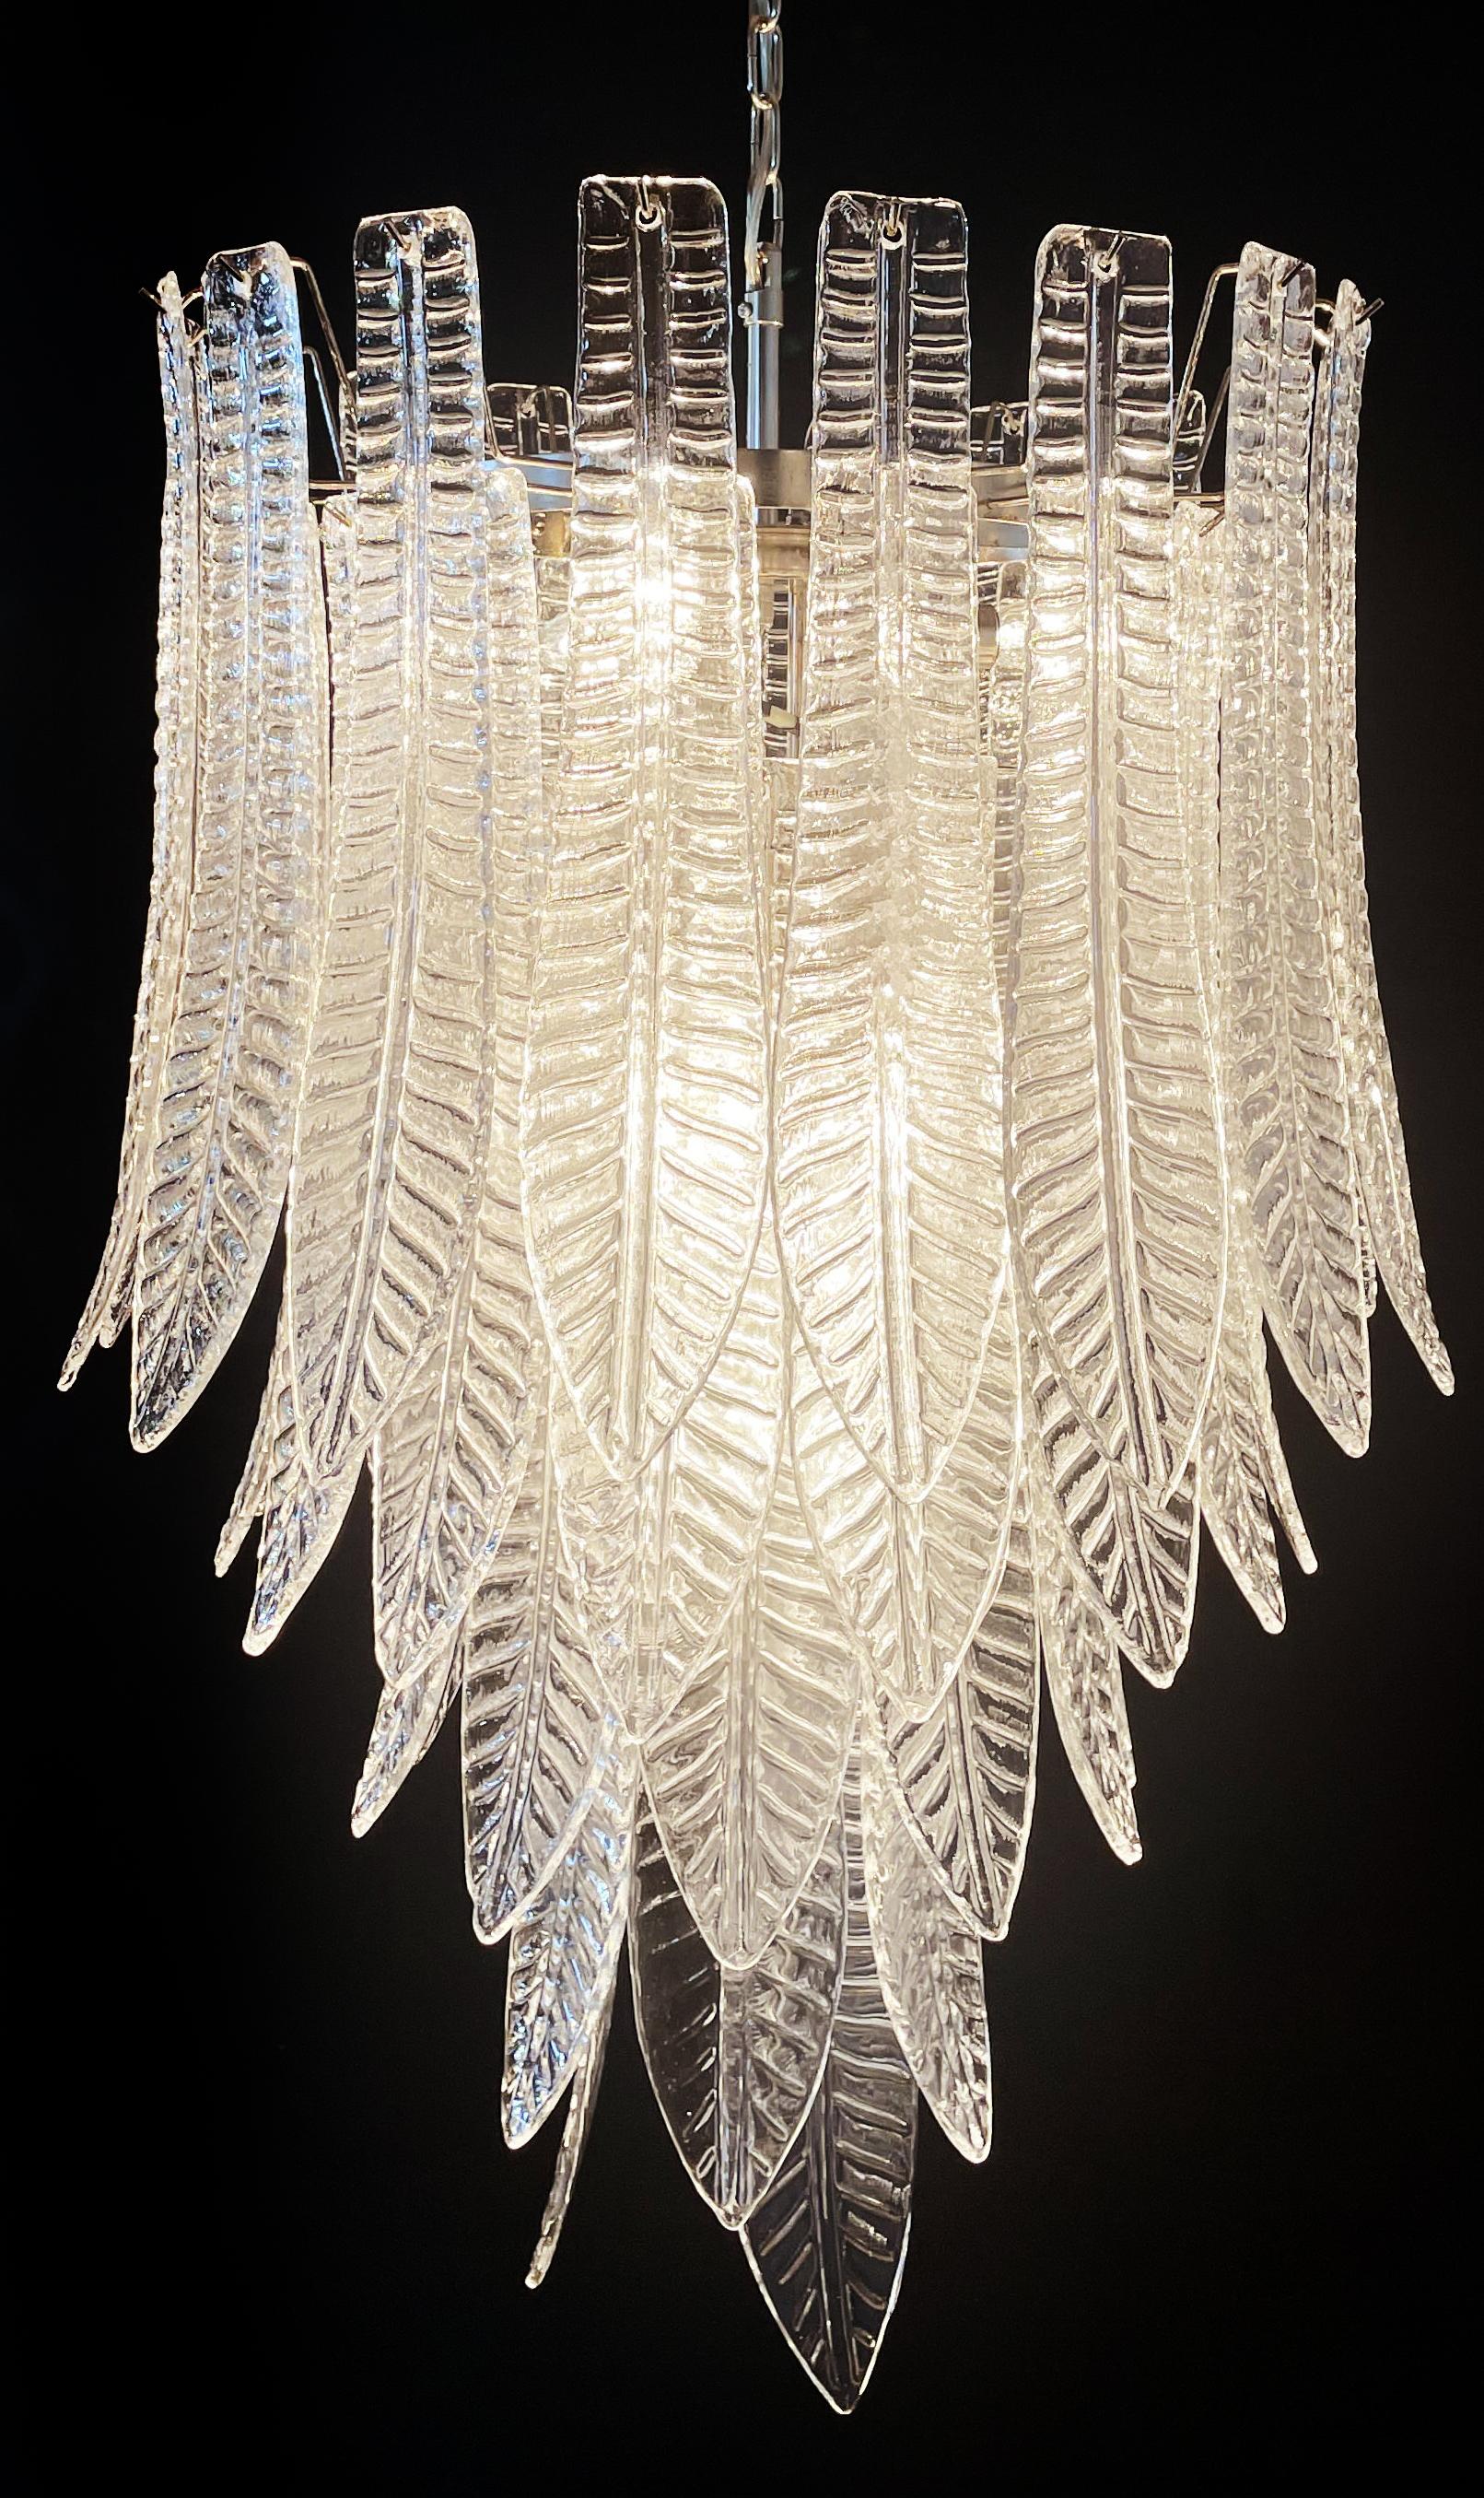 Magnificent Huge Italian Murano Felci Glass chandeliers - 52 glasses For Sale 4